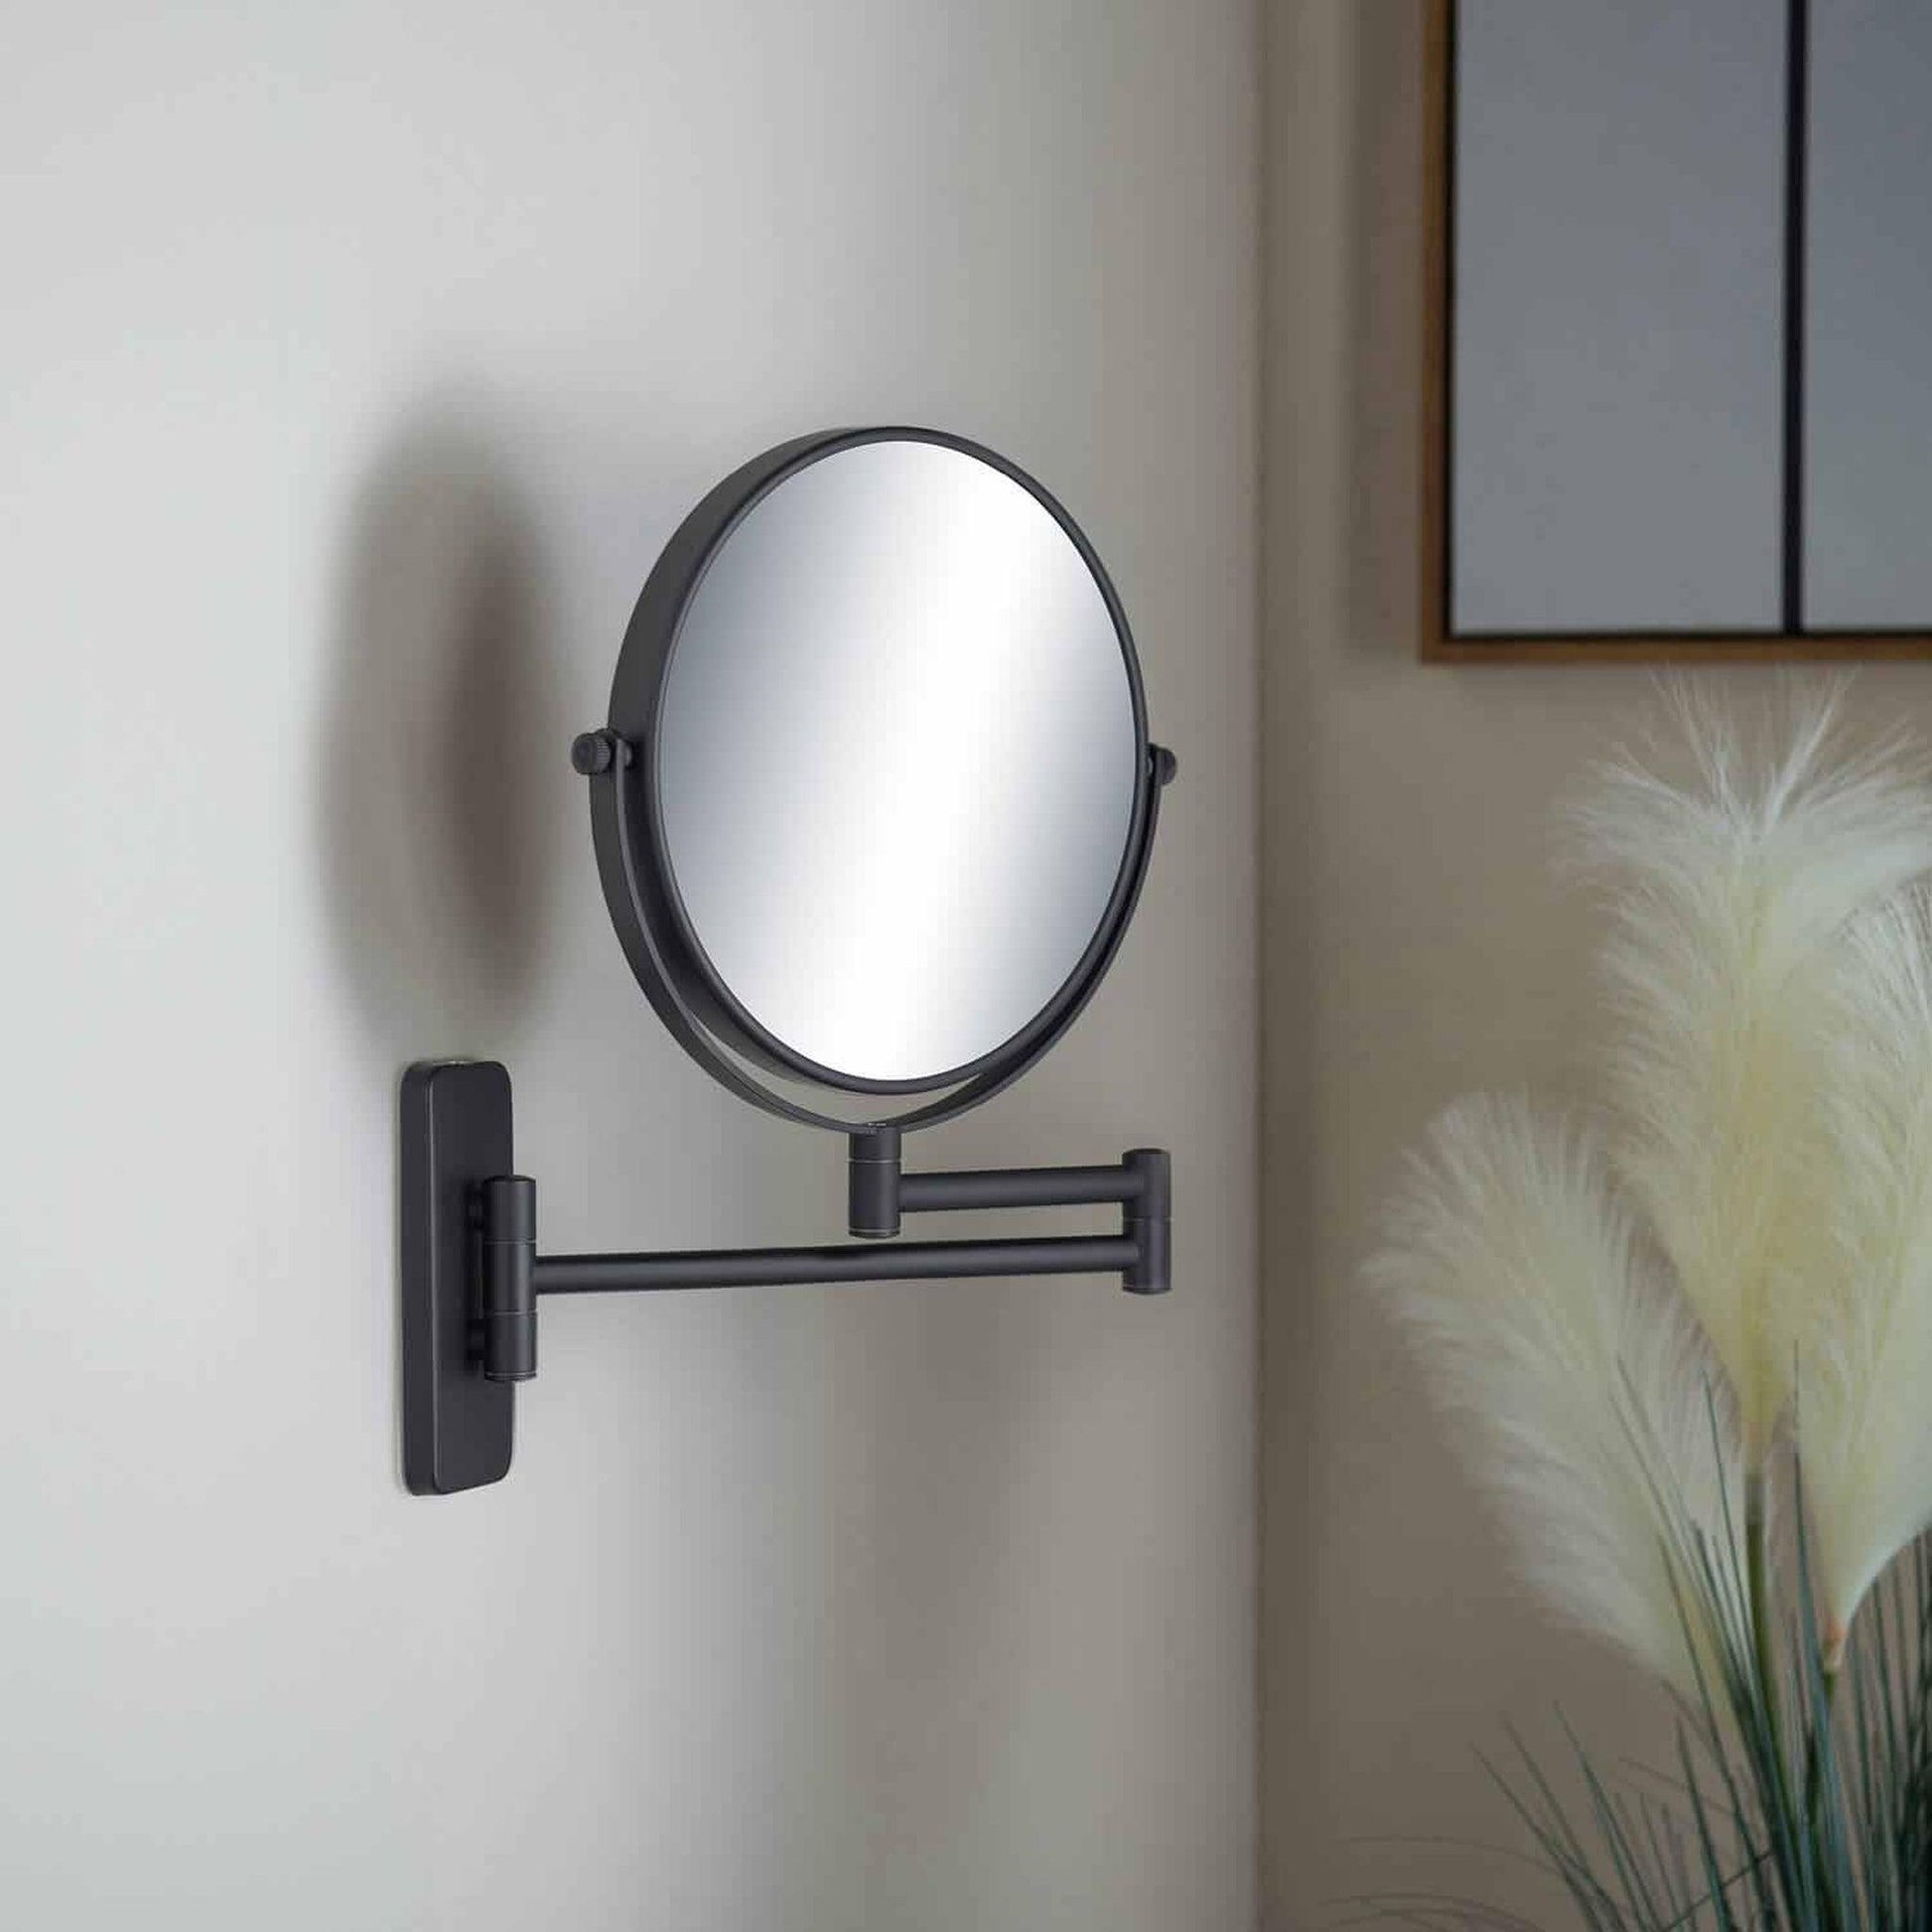 KIBI Circular Brass Bathroom Magnifying Makeup Shaving Mirror in Matte Black Frame Finish